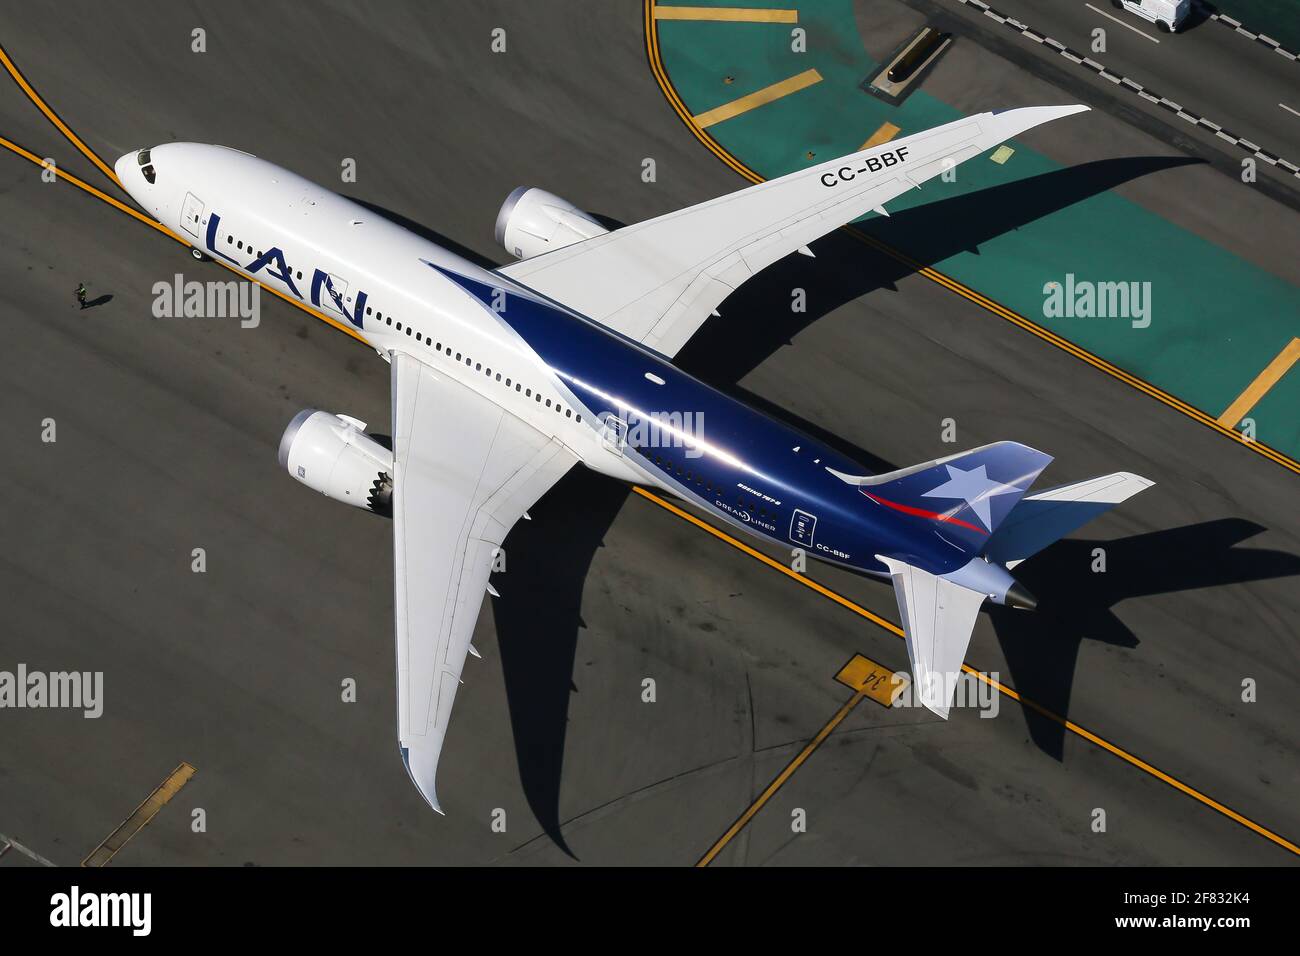 Los Angeles, USA - 20. Februar 2016: LAN Boeing 787-8 am Flughafen Los Angeles (LAX) in den USA. Boeing ist ein Flugzeughersteller mit Sitz in Seattle, W Stockfoto